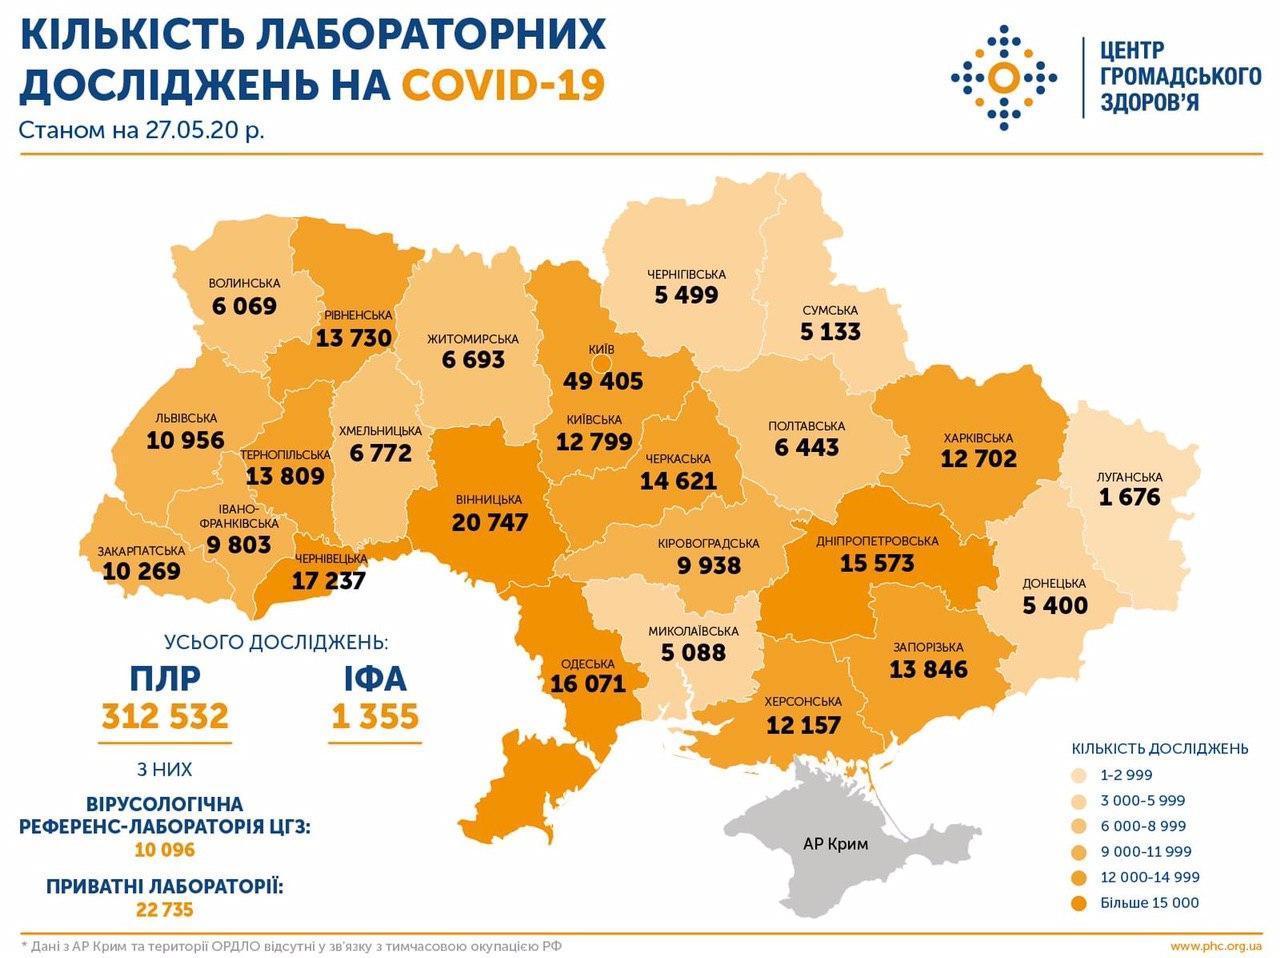 https://img.glavnoe.ua/Image2018/2020/05/27/photo_2020-05-27_16-46-03.jpg